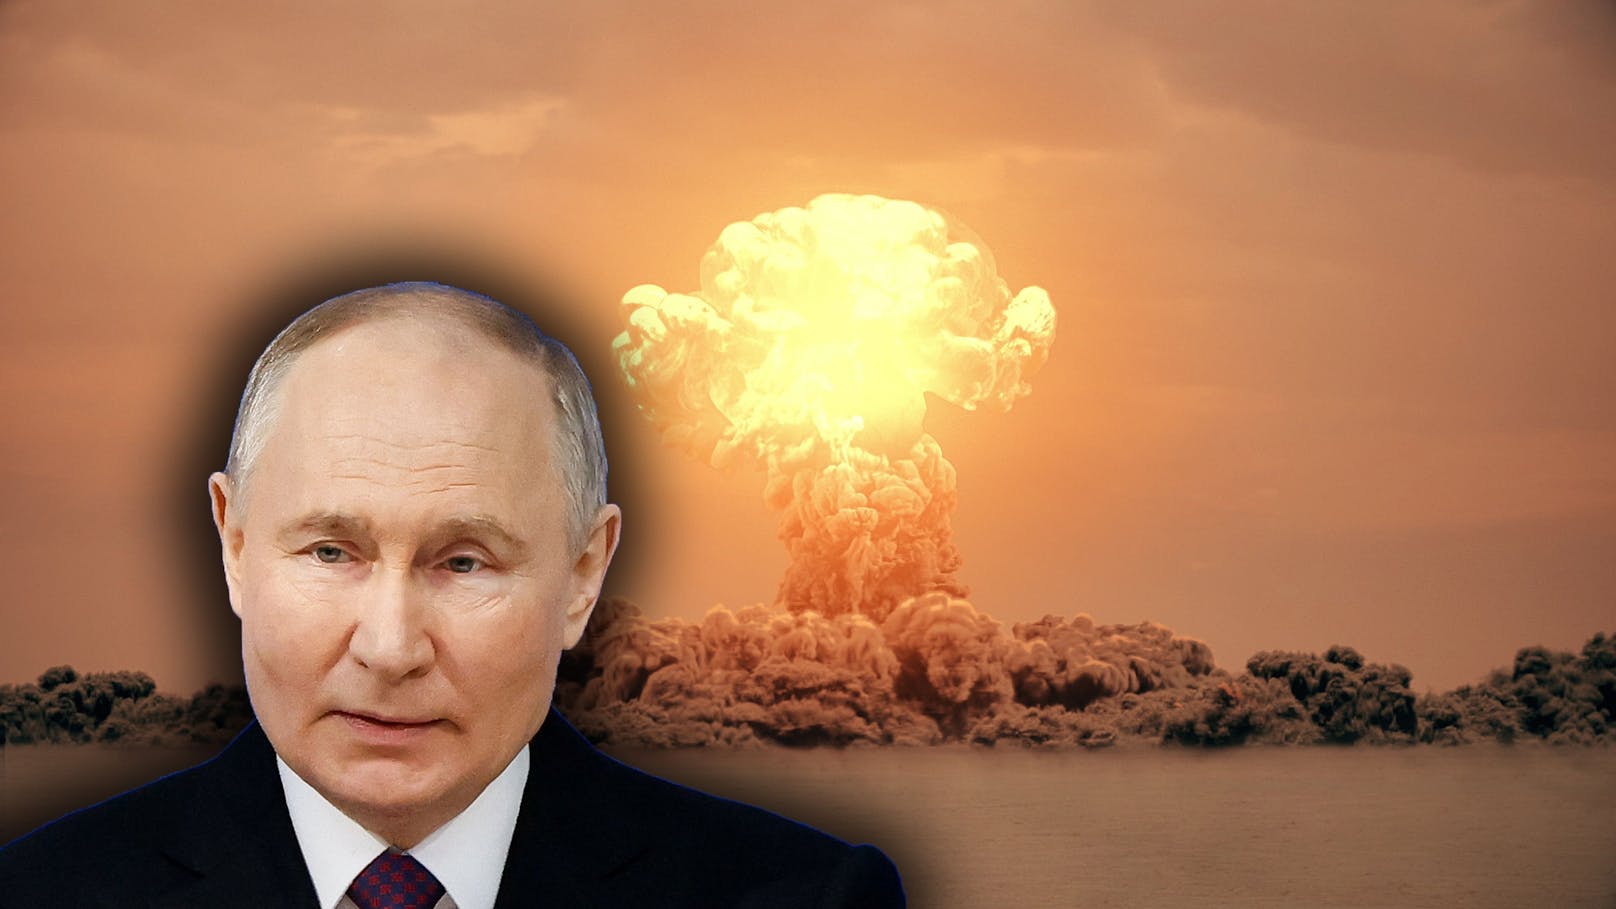 Putin: "Russlands nukleare Waffen sind immer bereit"